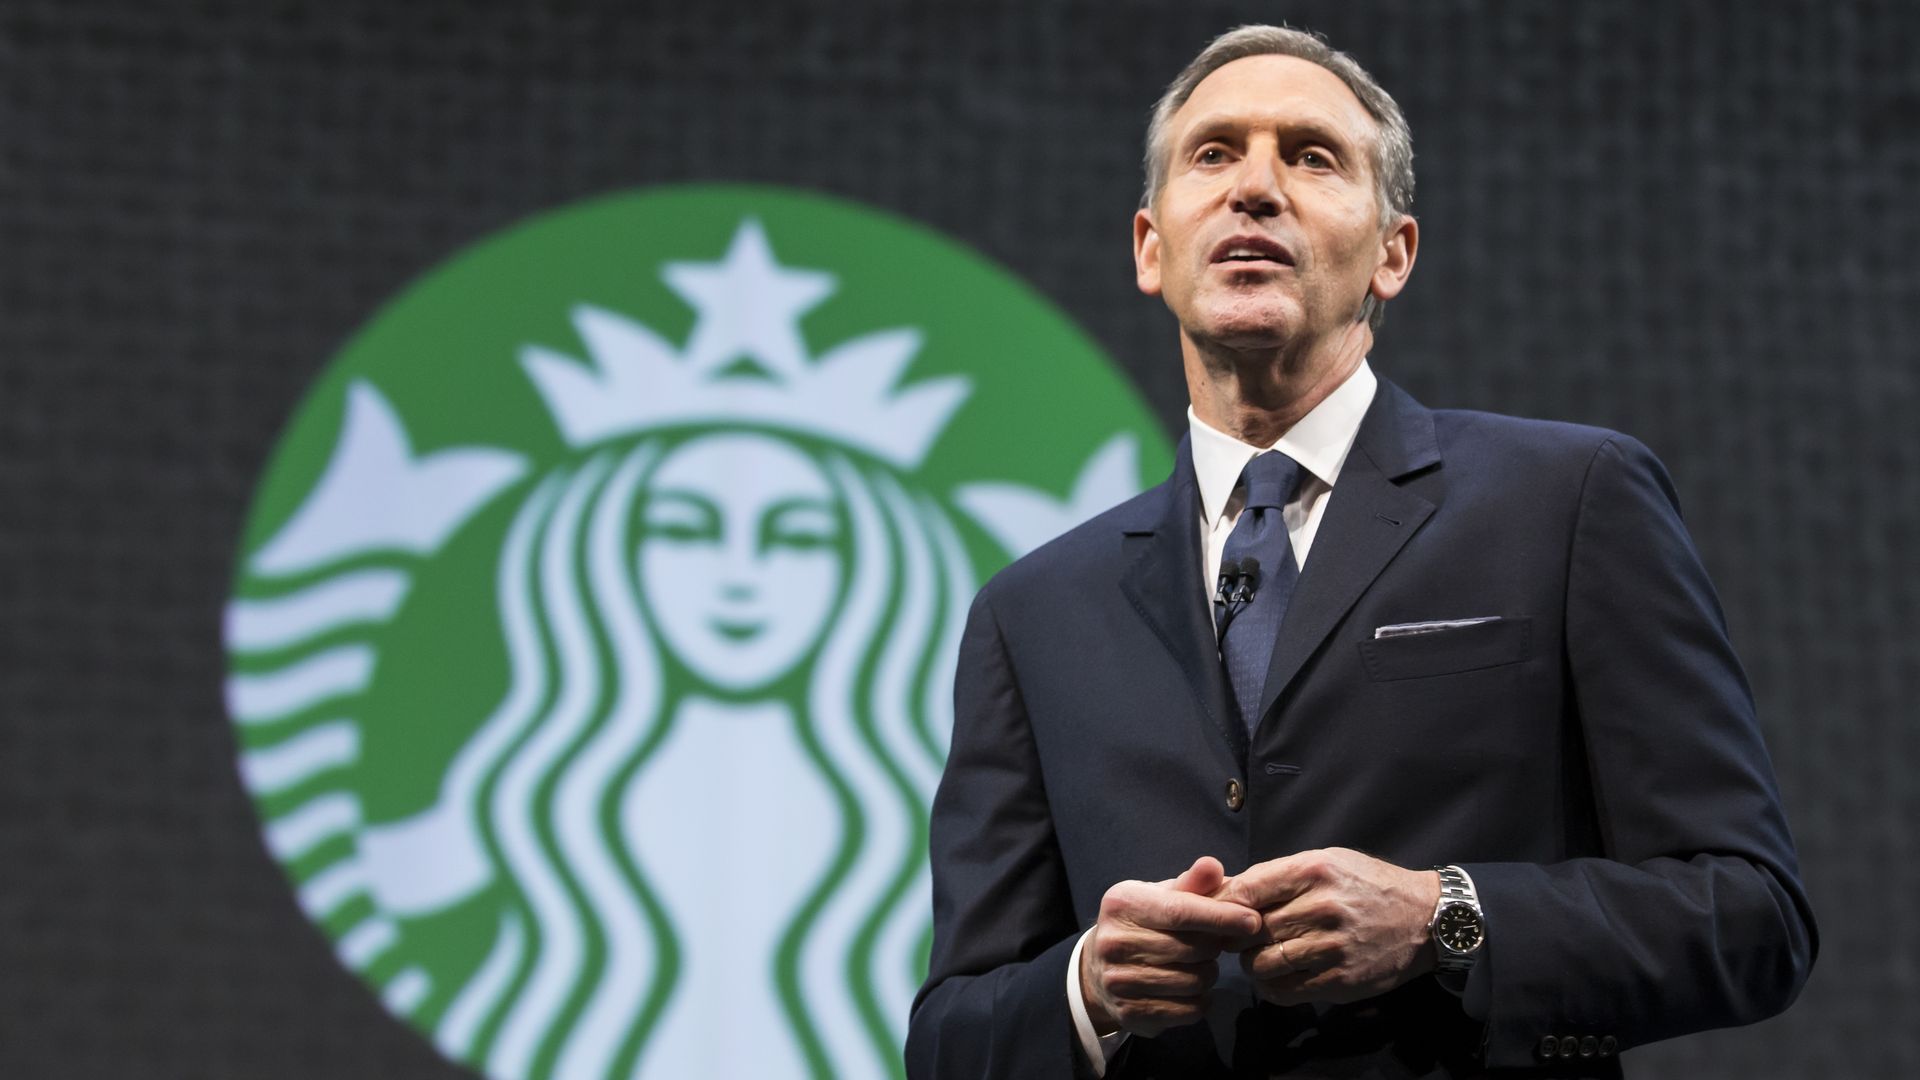 Starbucks' then-CEO Howard Schultz speaks during Starbucks annual shareholders meeting March 18, 2015 in Seattle, Washington. 